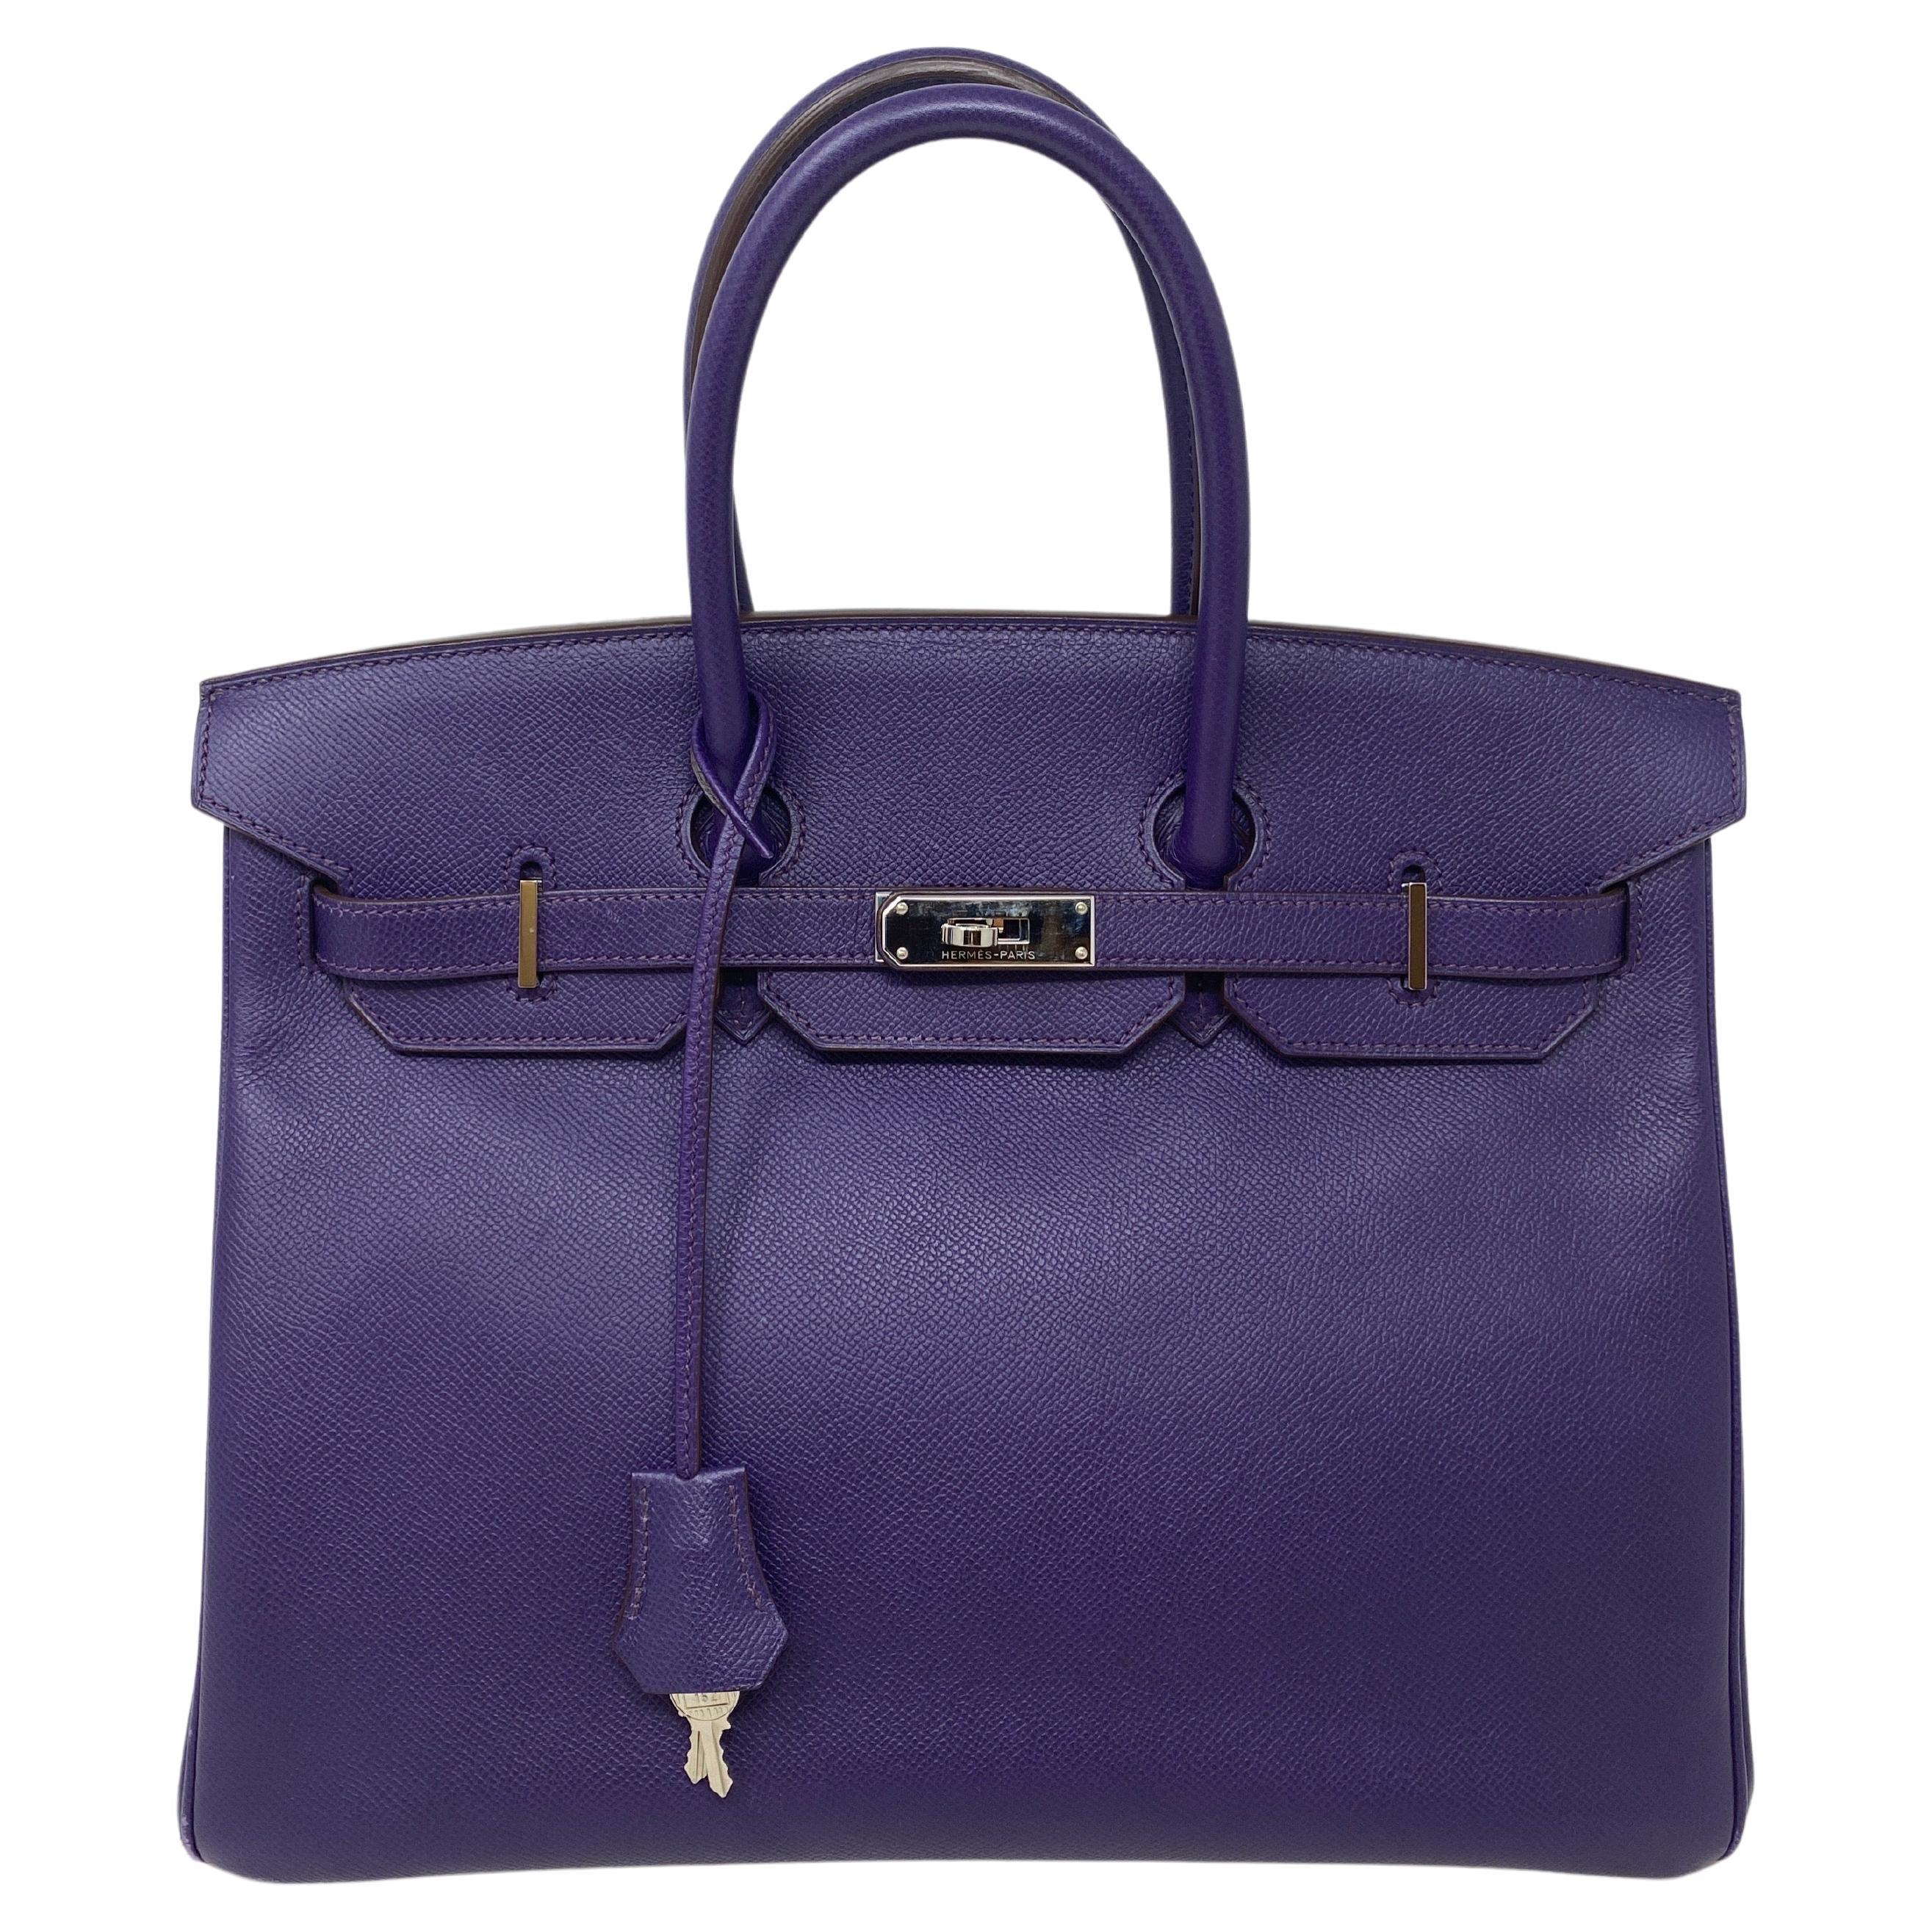 Hermes Purple Birkin 35 Bag 